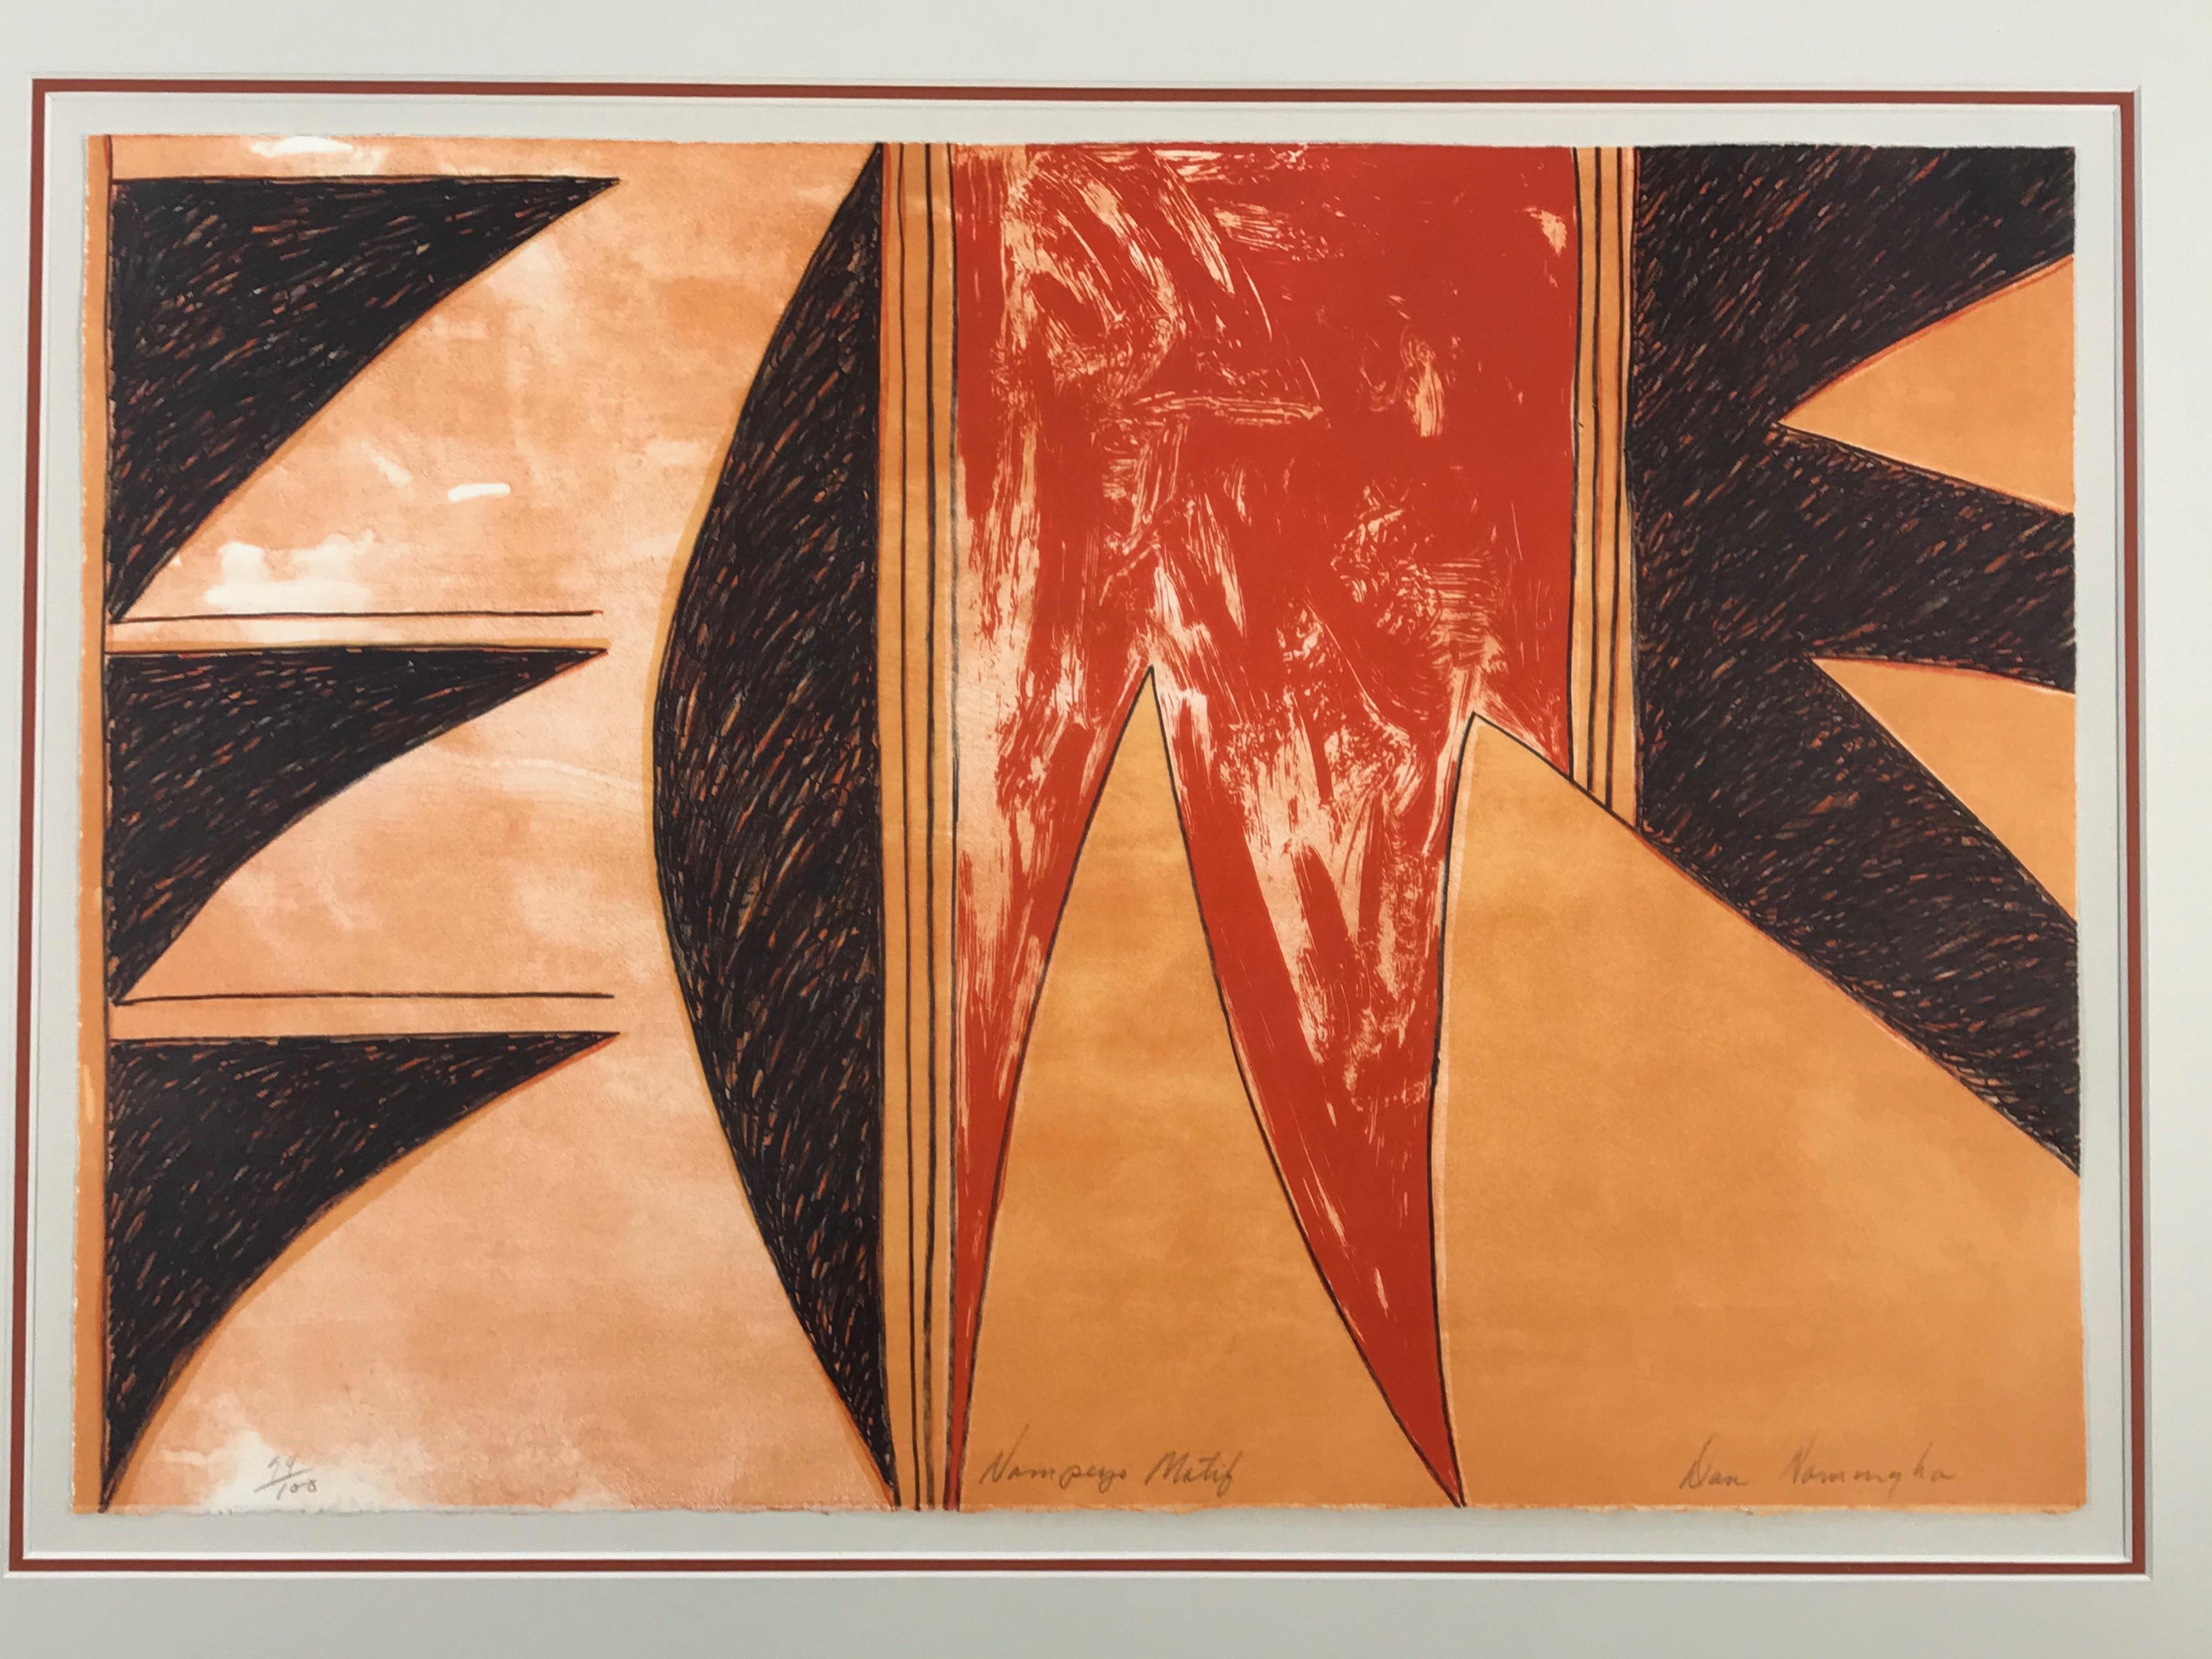 Nampeyo Motif, limited edition lithograph, Hopi, Tewa, pottery design, tan,red